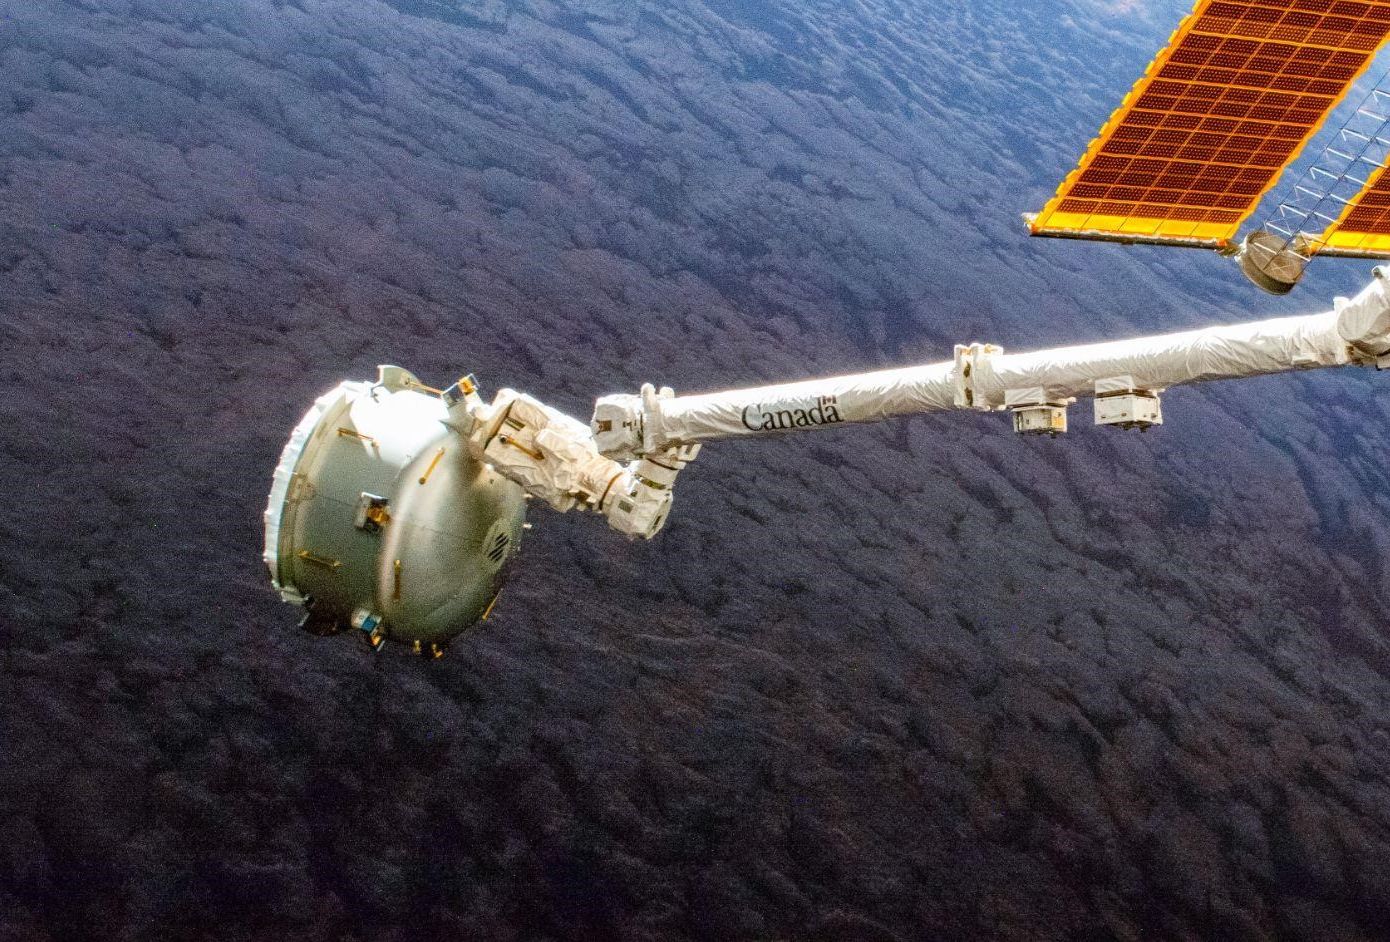 Nanoracks Bishop Airlock on the ISS